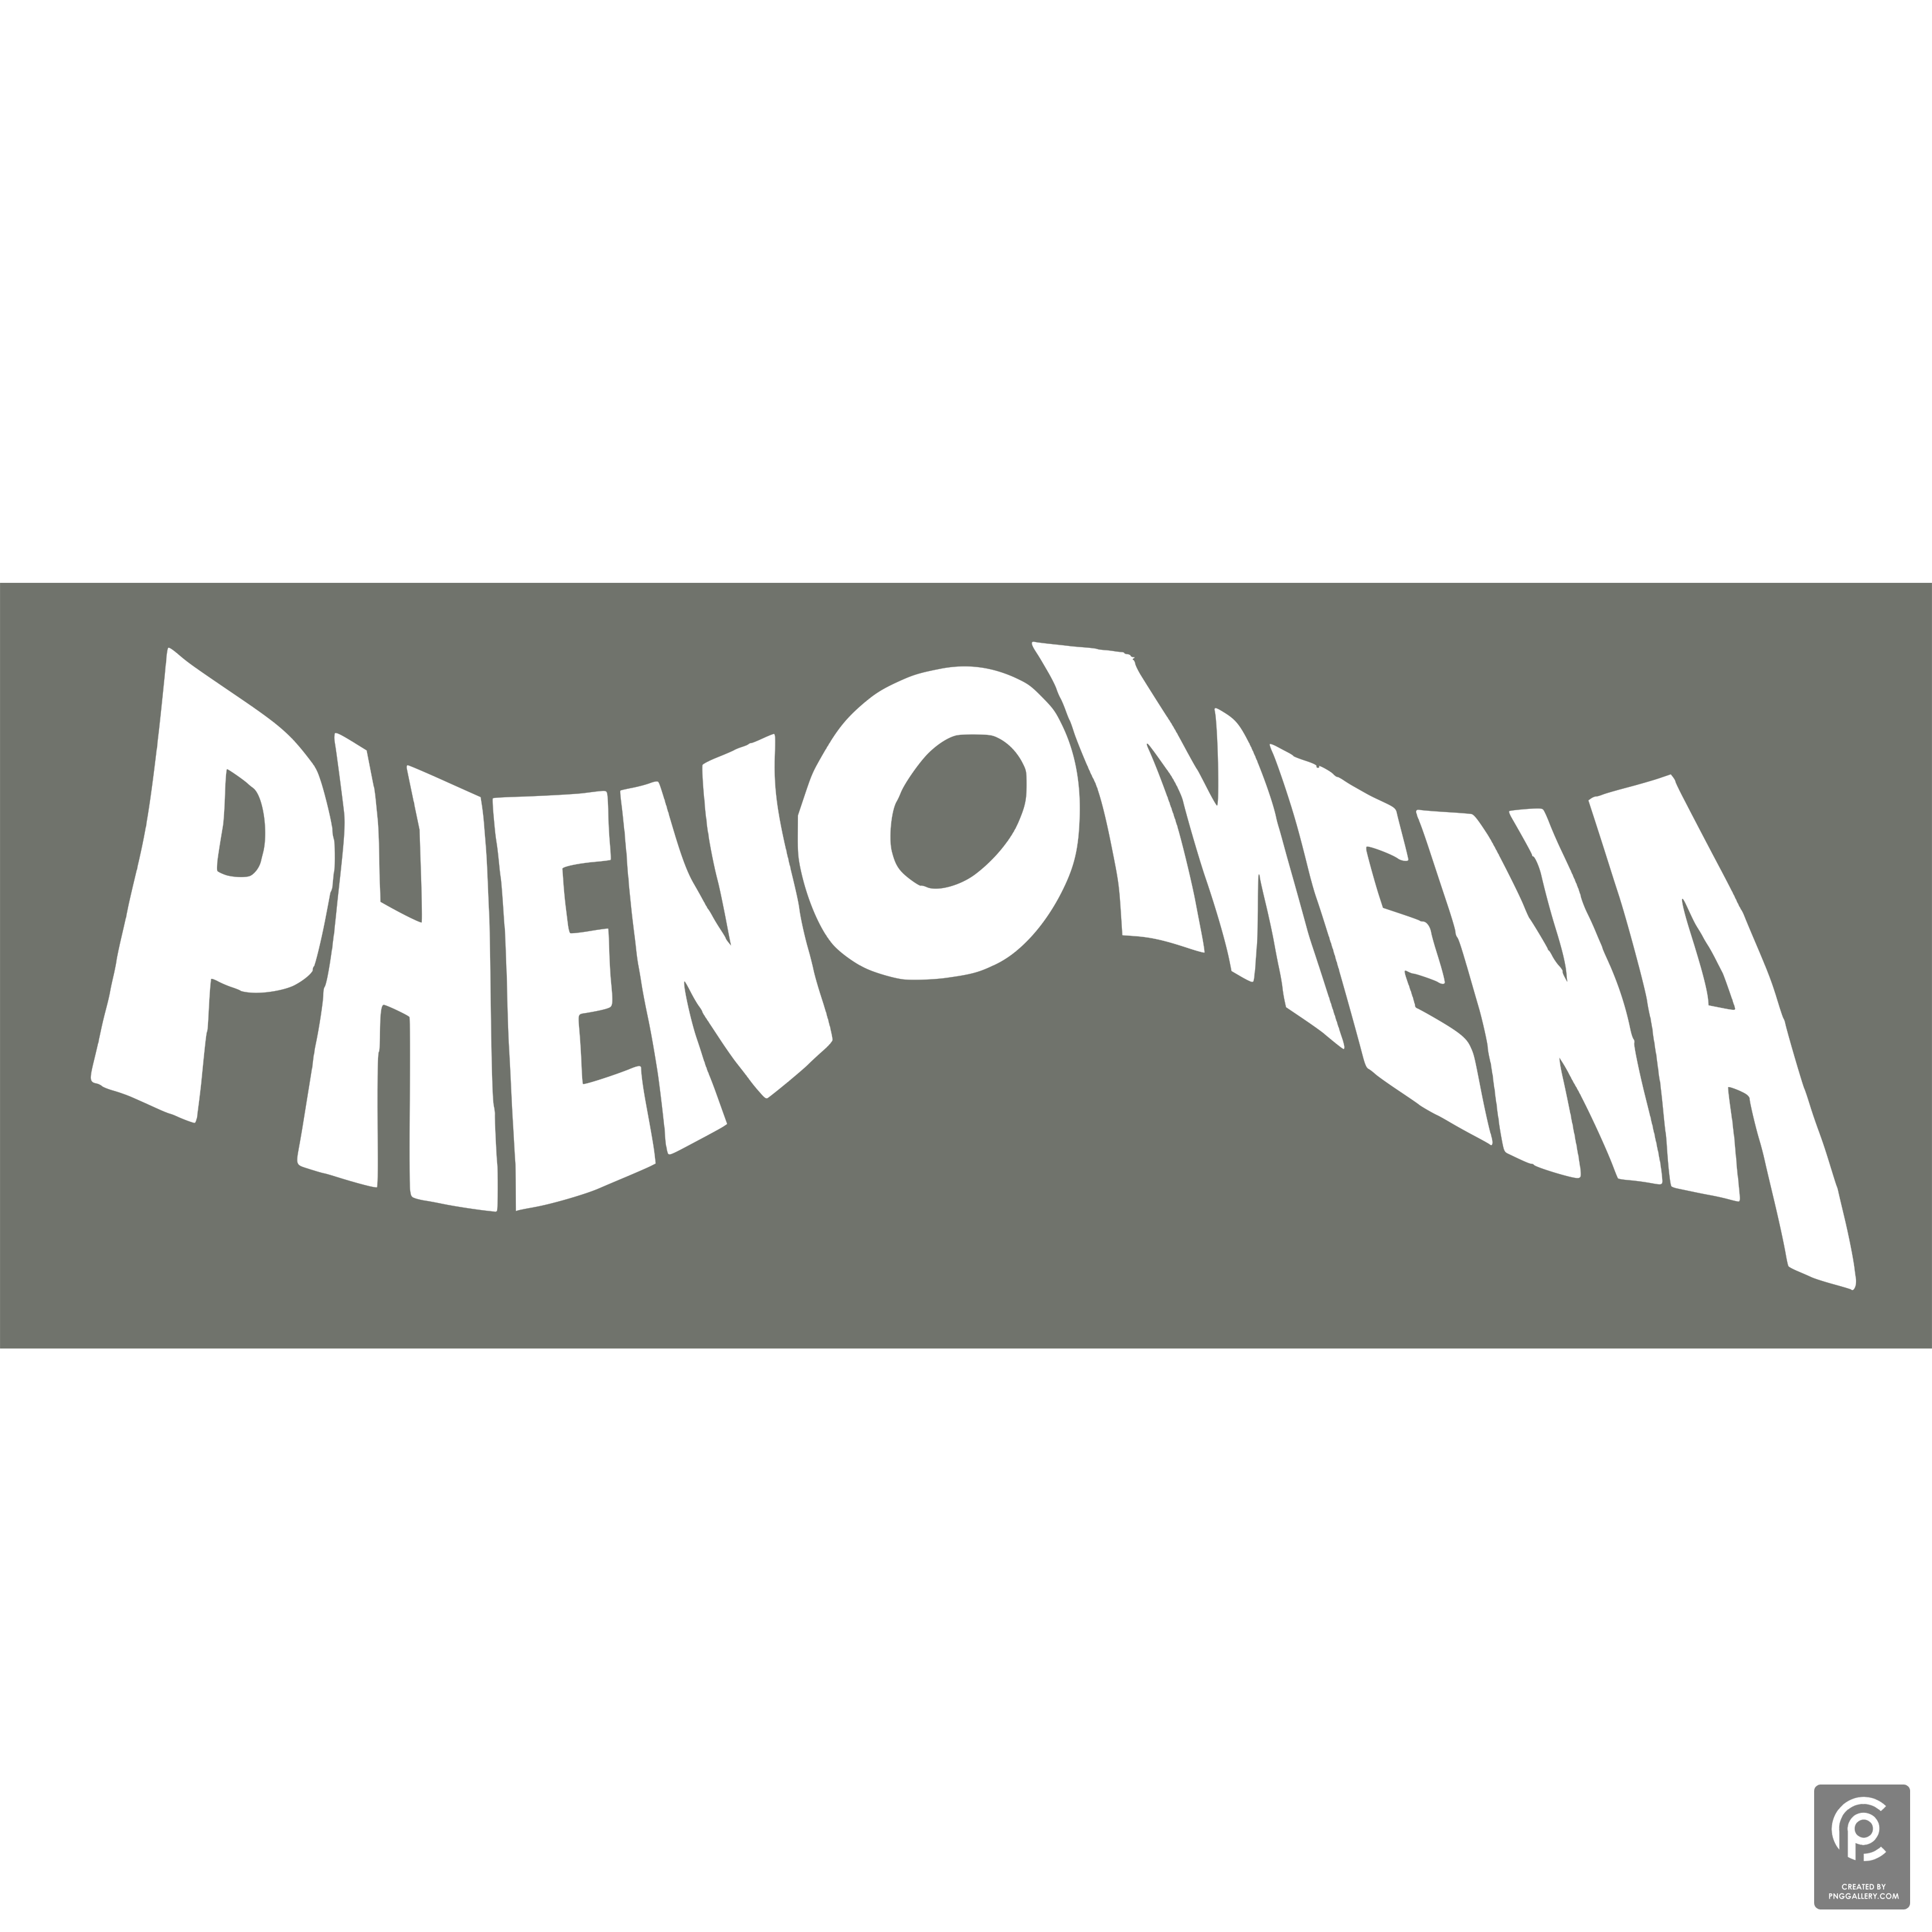 Phenomena Logo Transparent Clipart